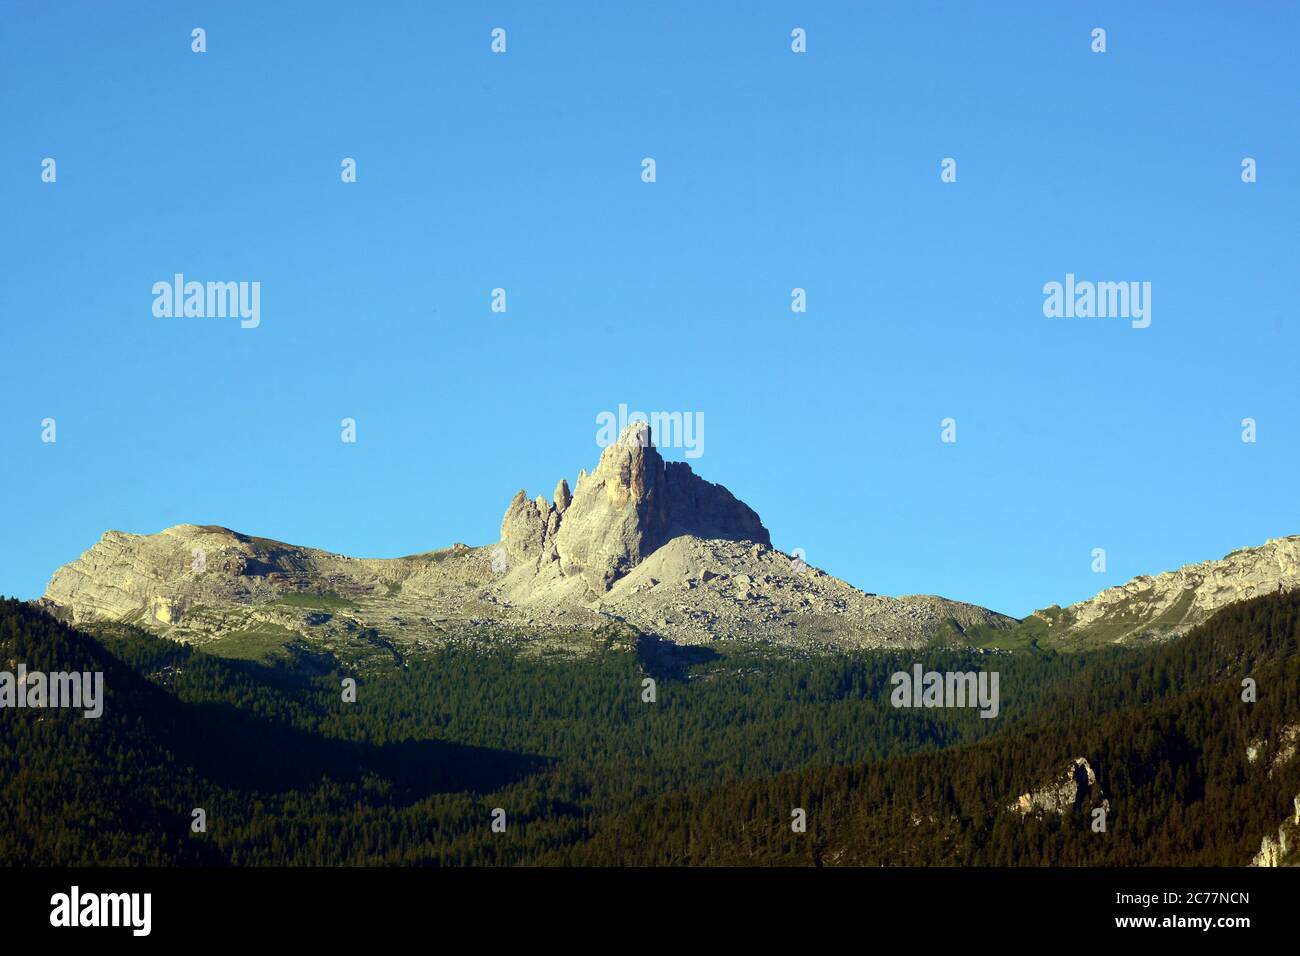 Croda da lago, a mountain in the Italian Dolomites Stock Photo